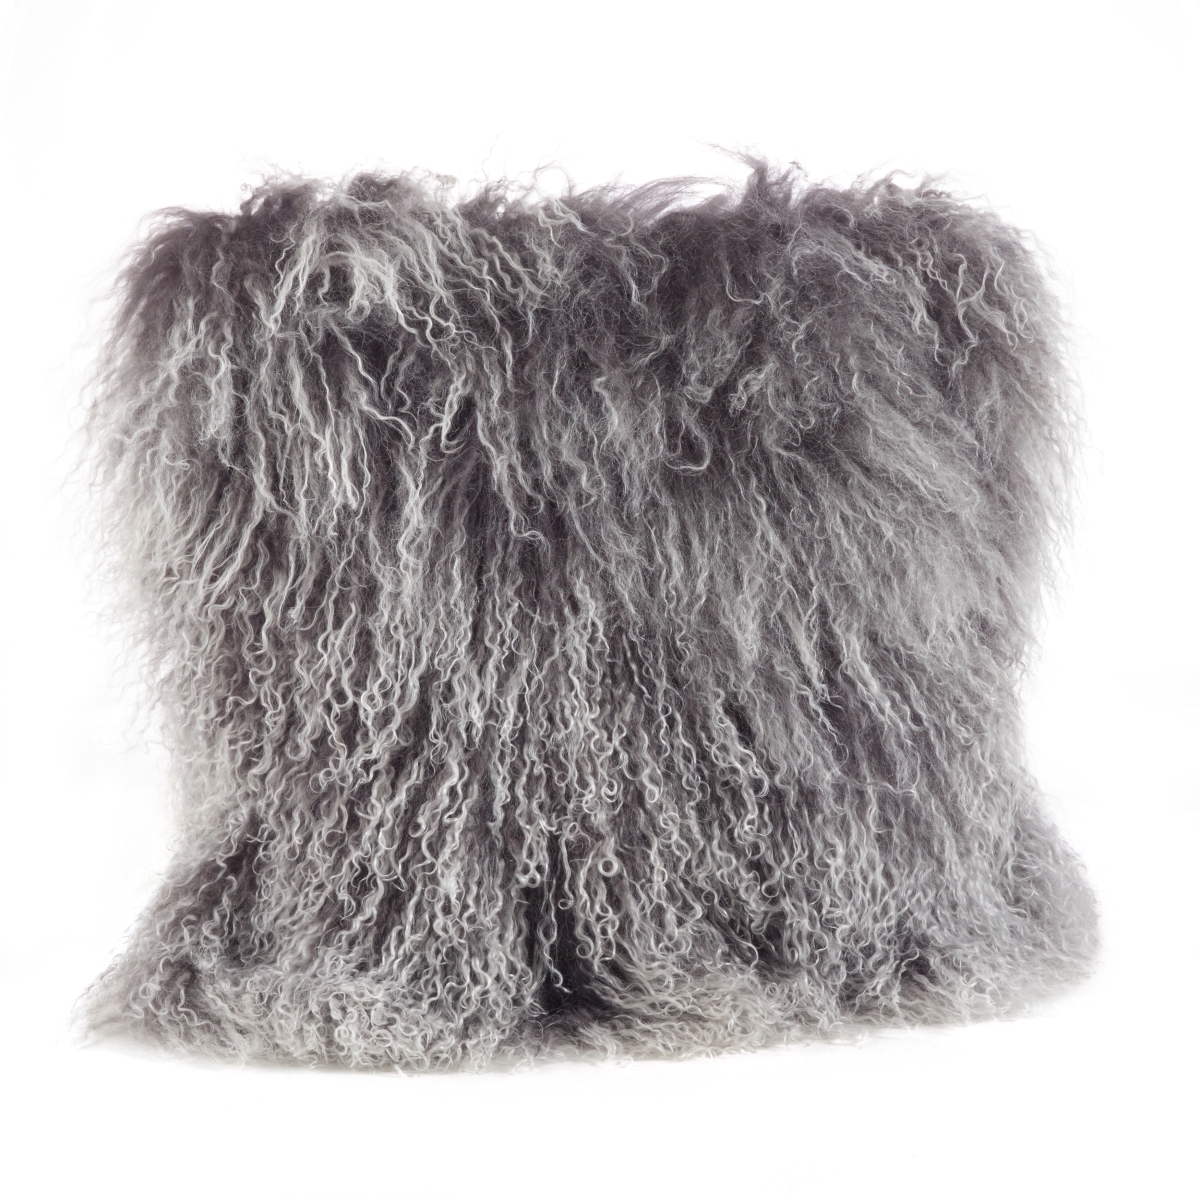 3564.ck16s 16 In. Wool Mongolian Lamb Fur Throw Pillow - Charcoal